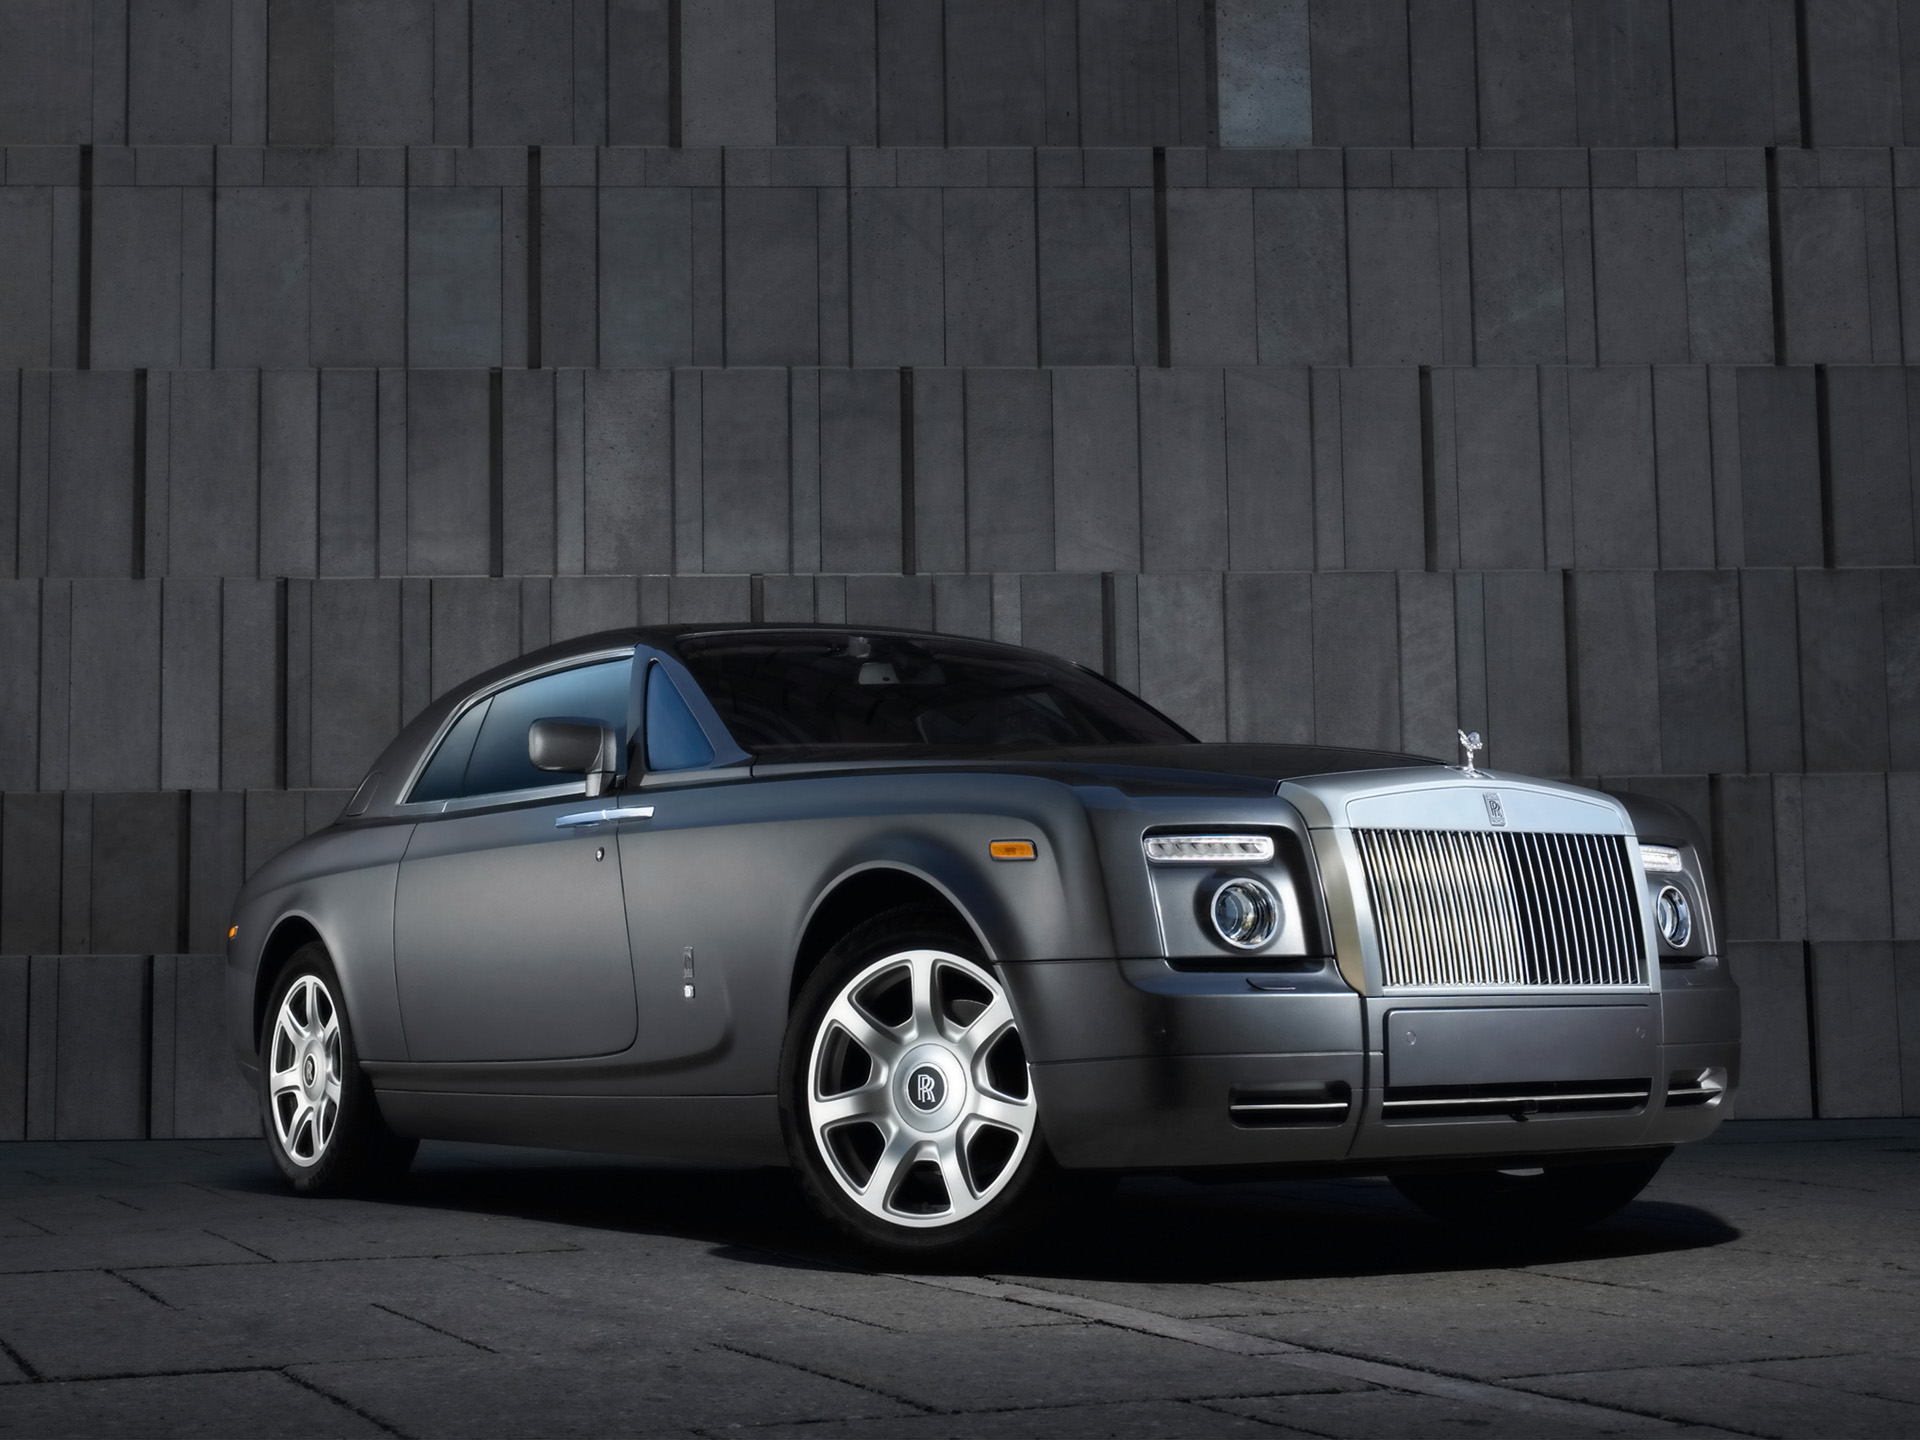 Rolls Royce Phantom V Coupe Touring